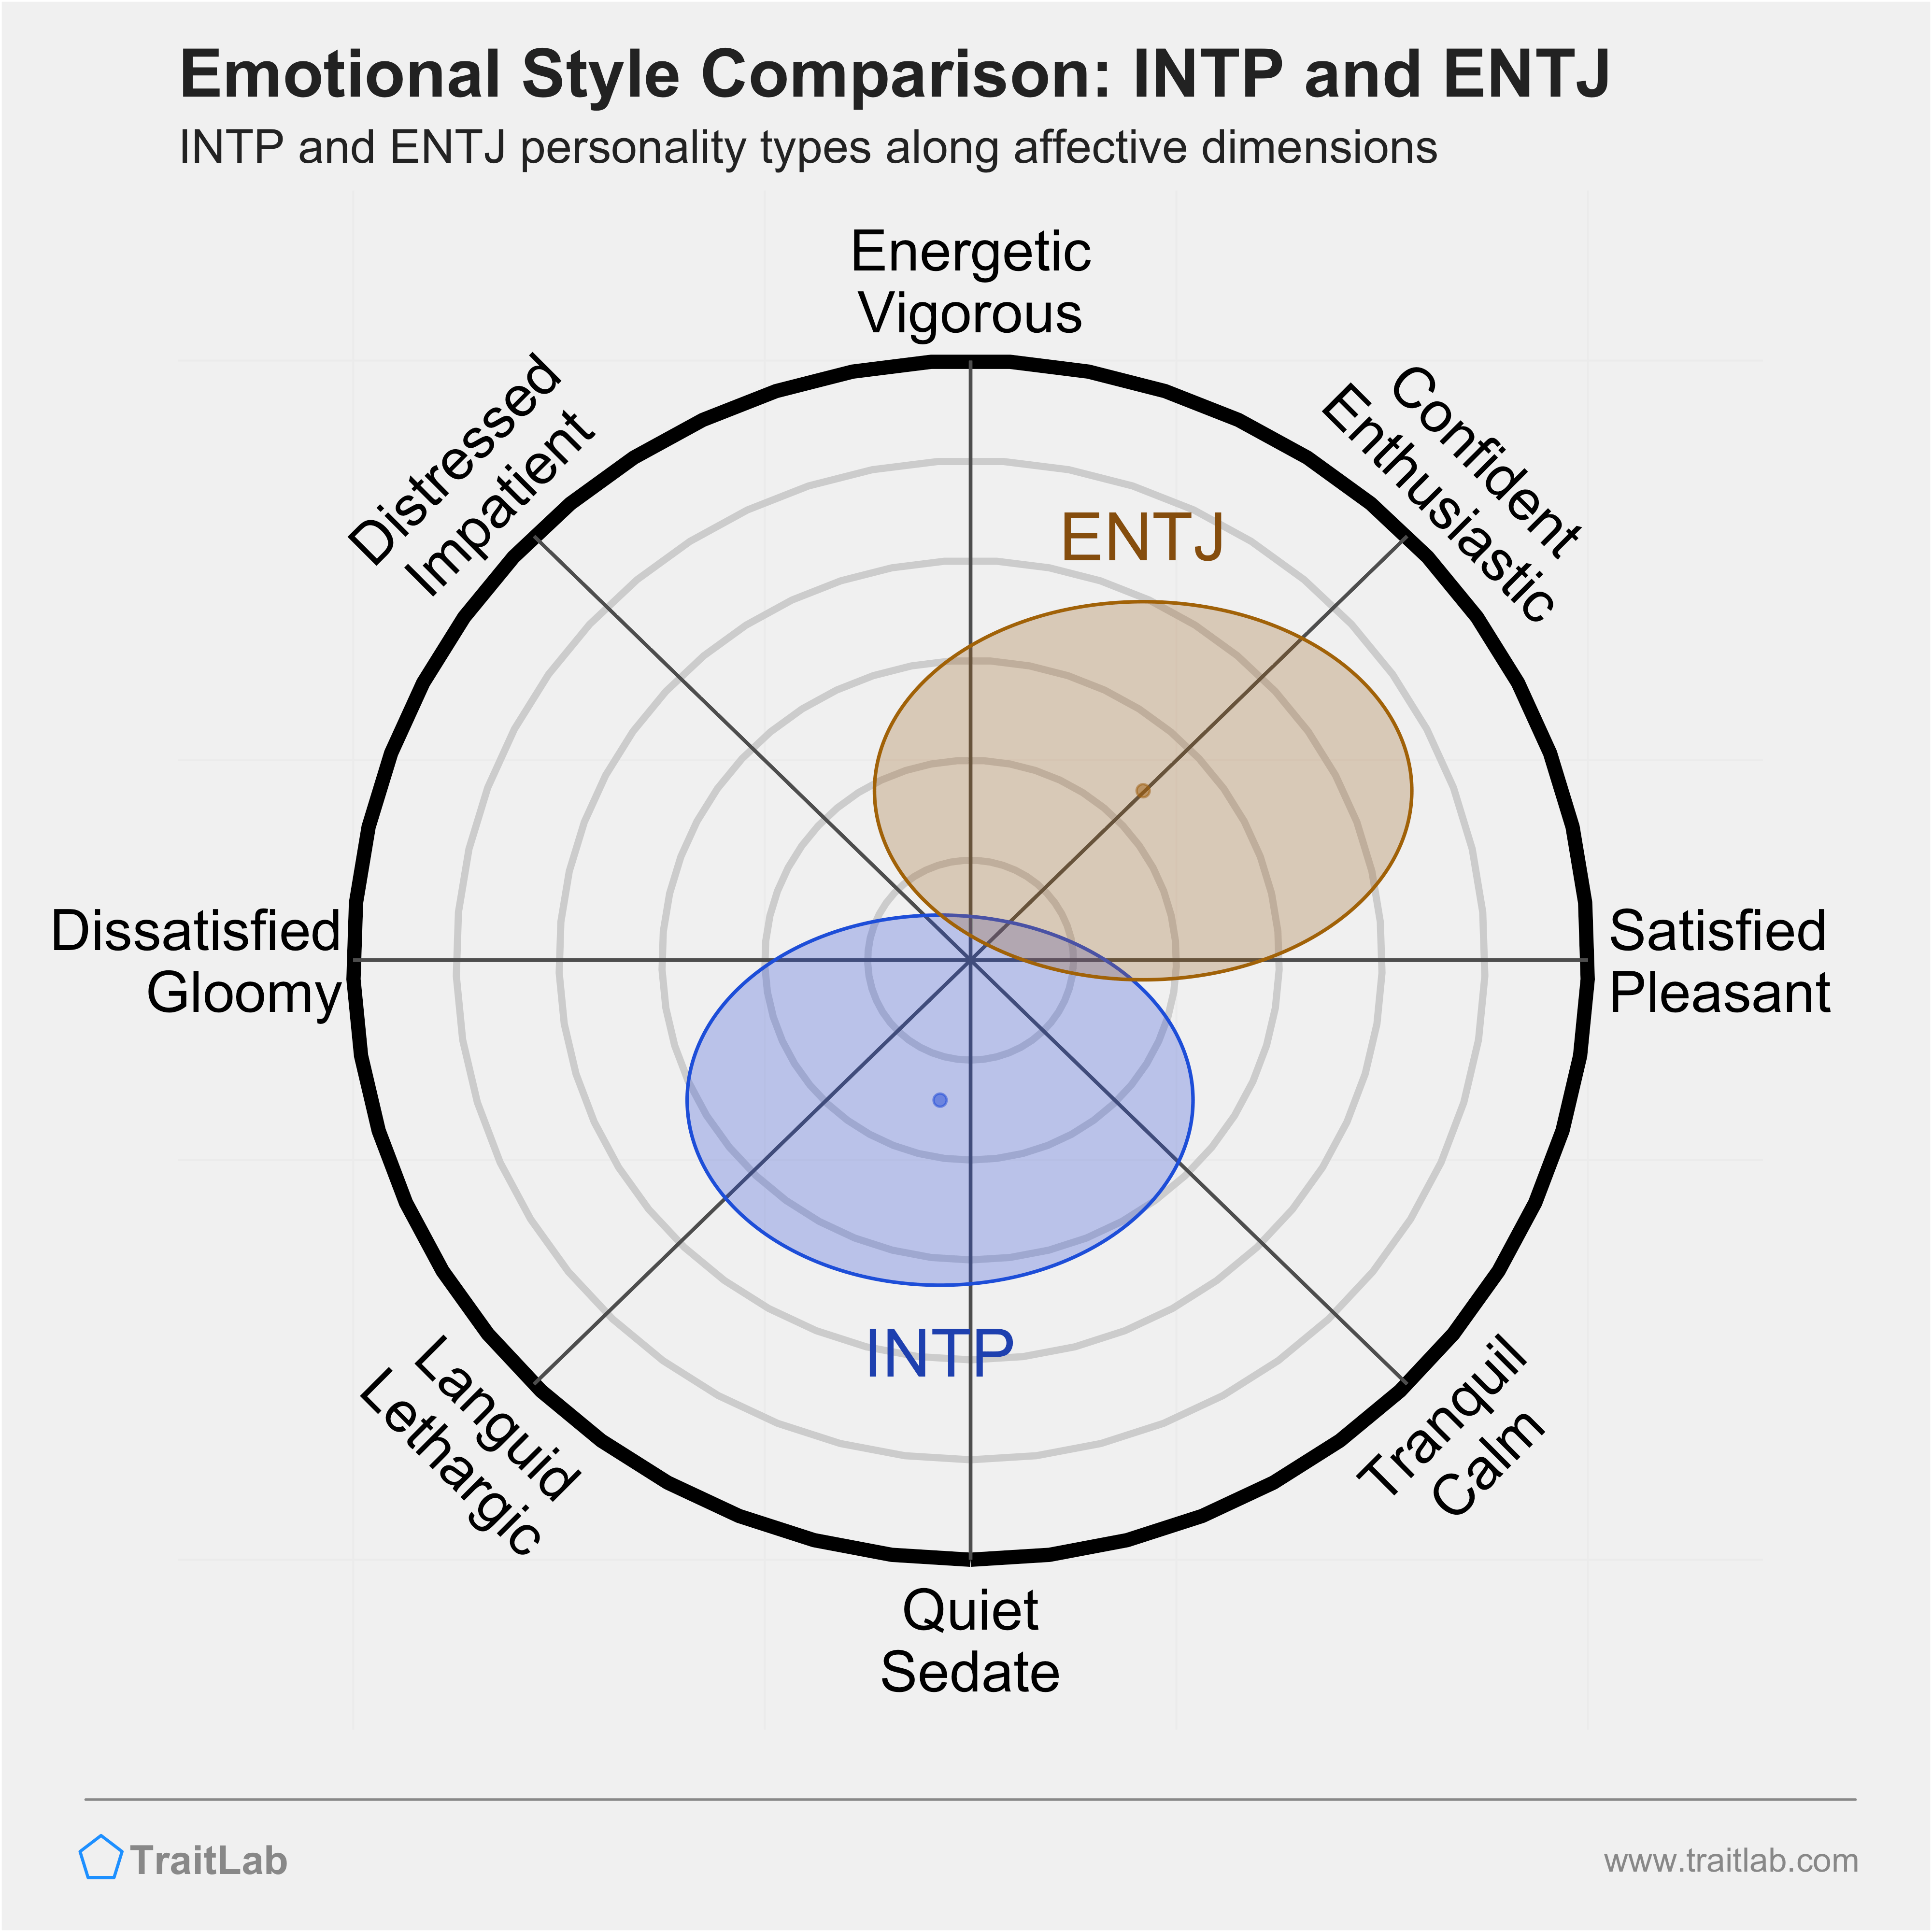 INTP and ENTJ comparison across emotional (affective) dimensions